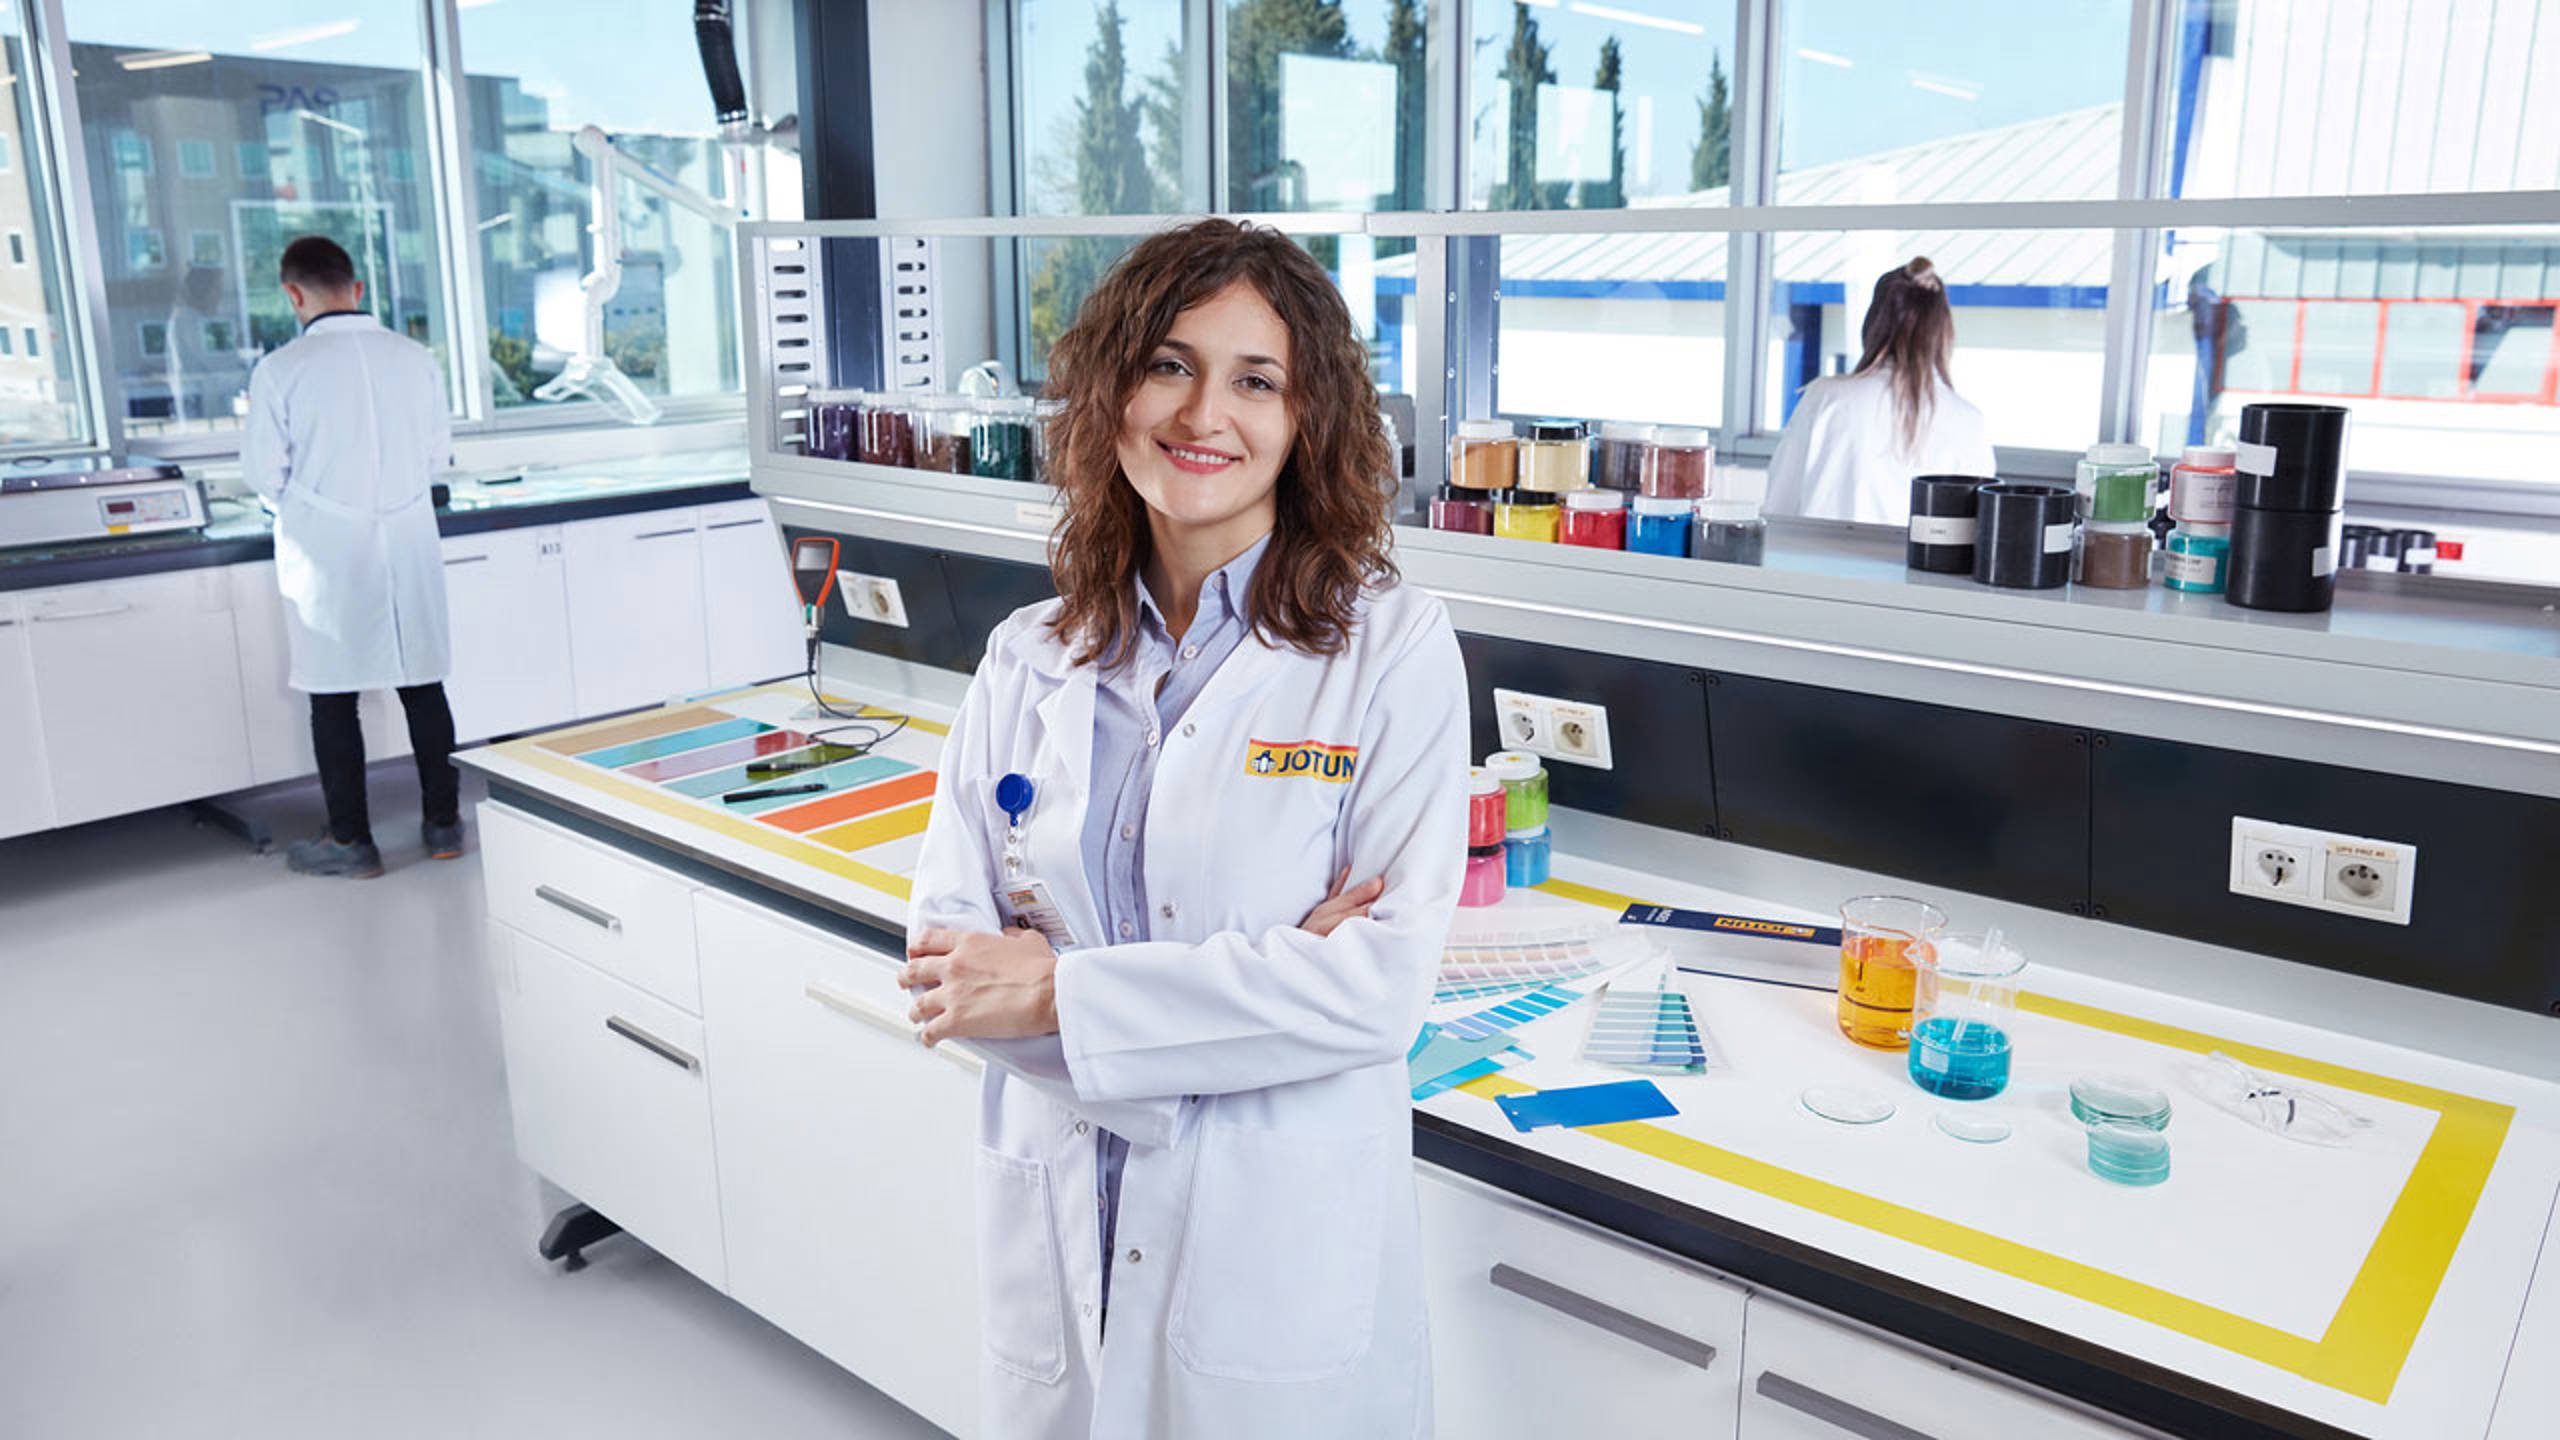 Senior R&D Chemist 1 Perihan Gundag in Jotun Turkey is one of many women working as a scientist in the Jotun R&D network. 